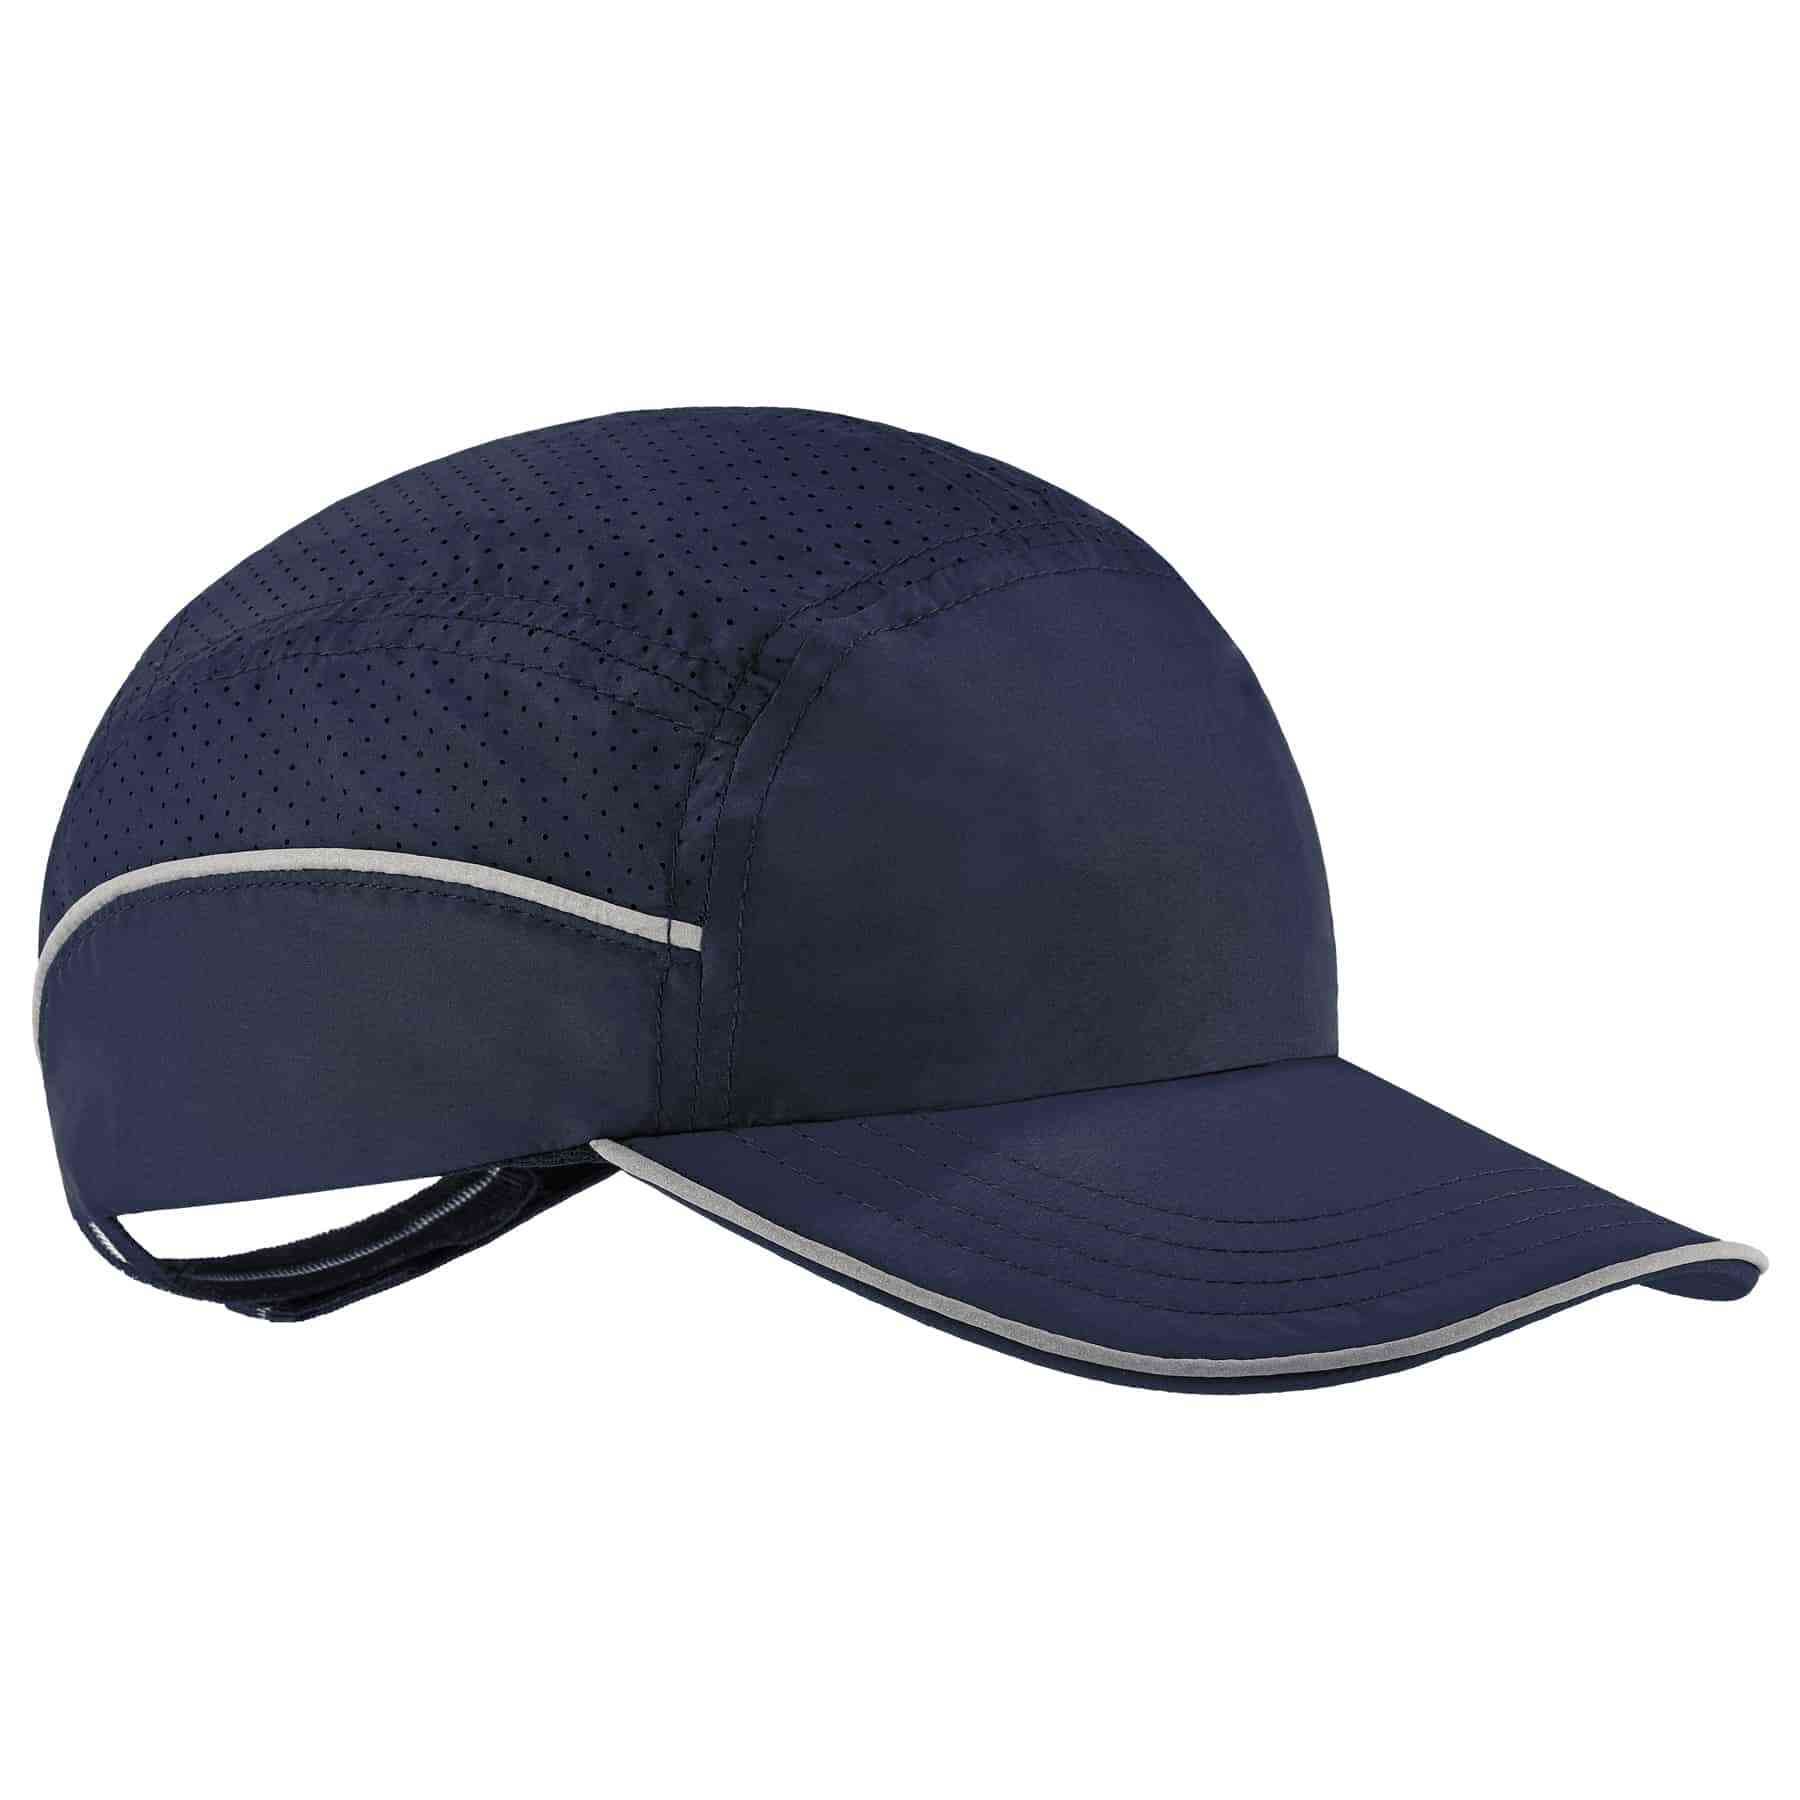 Ergodyne 8955 Lightweight Bump Cap Hat, Navy Blue, Impact Resistant ...